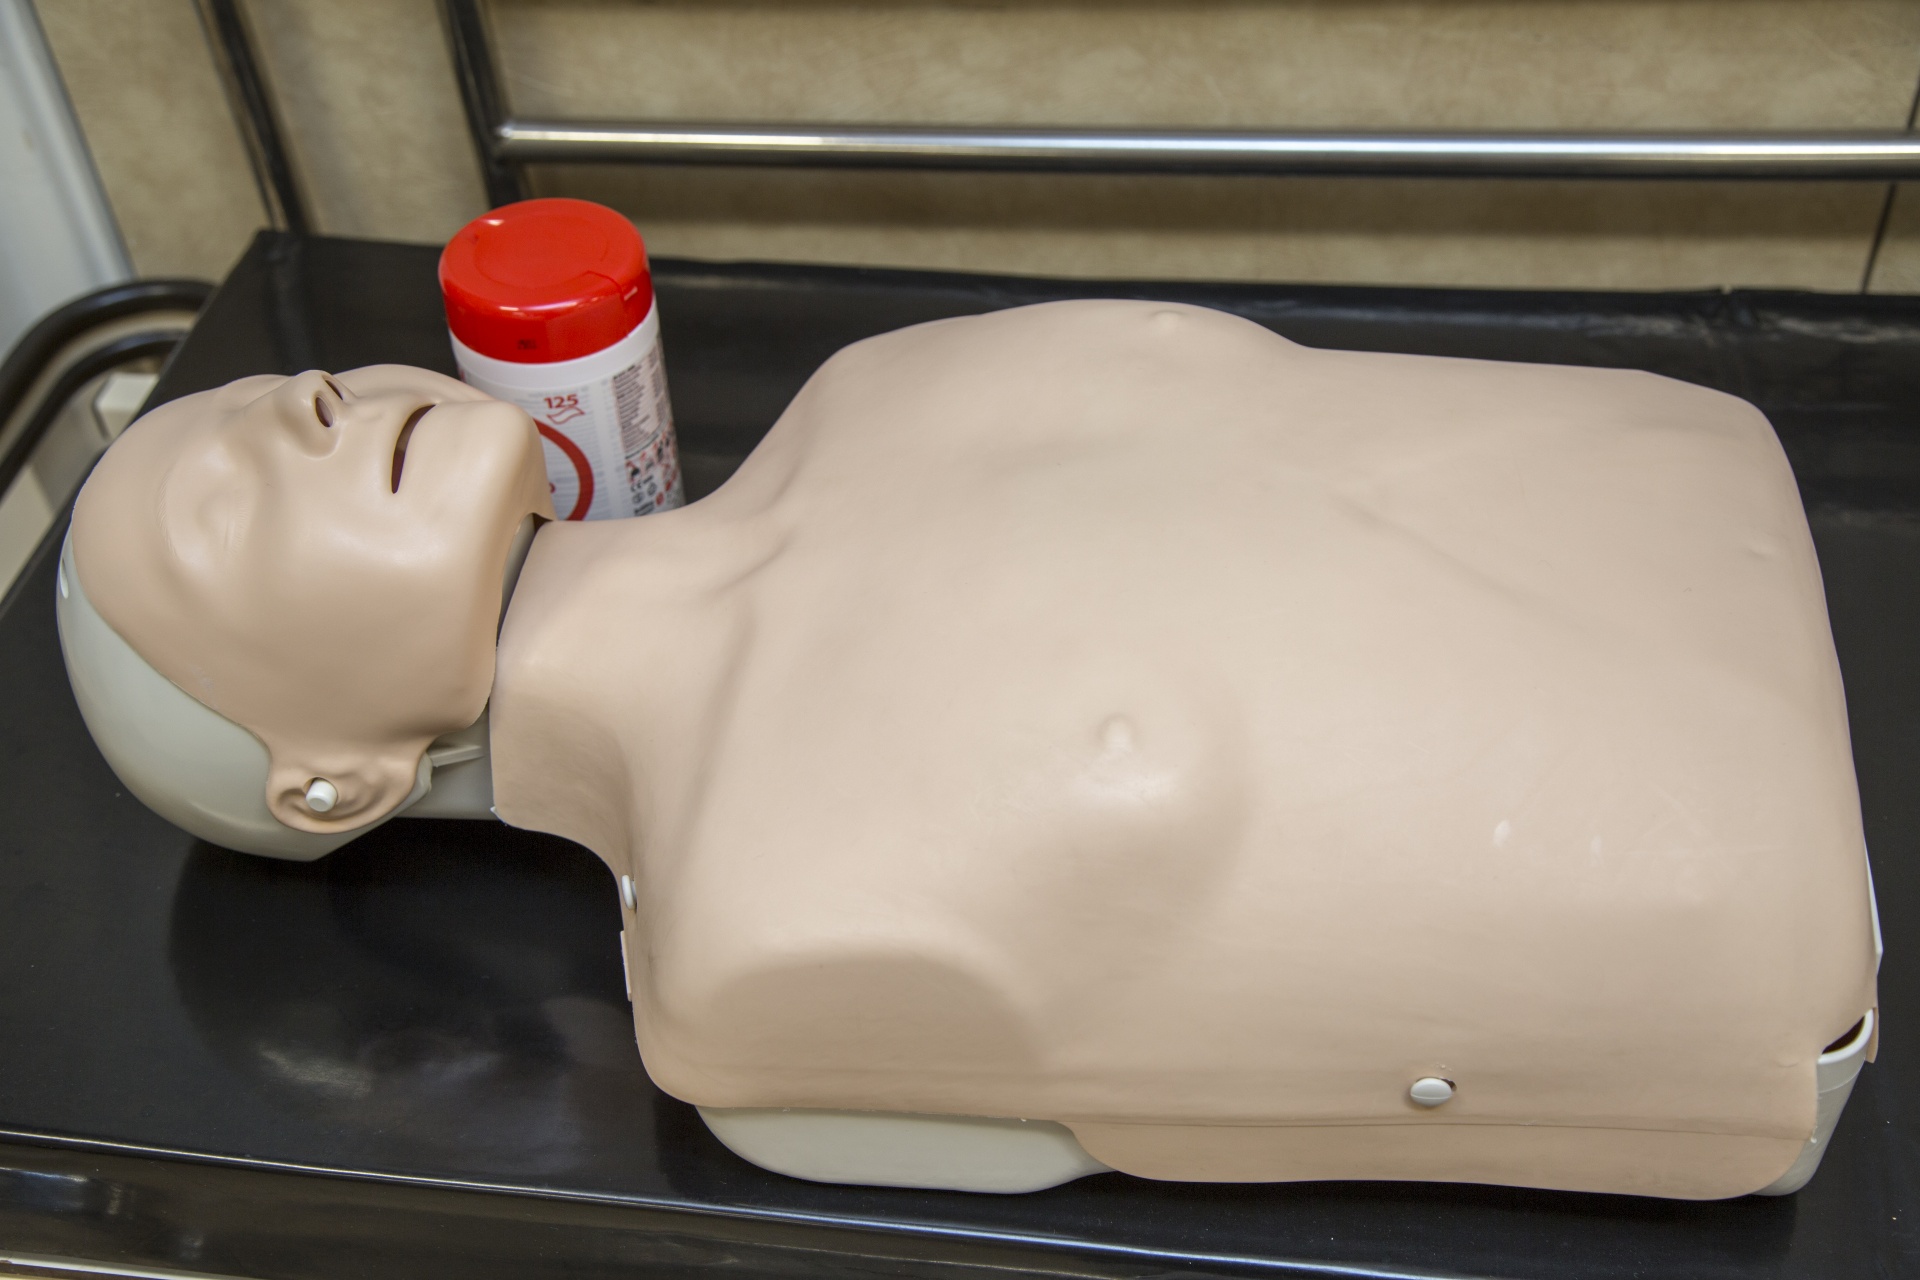 cpr defibrillator training class free photo